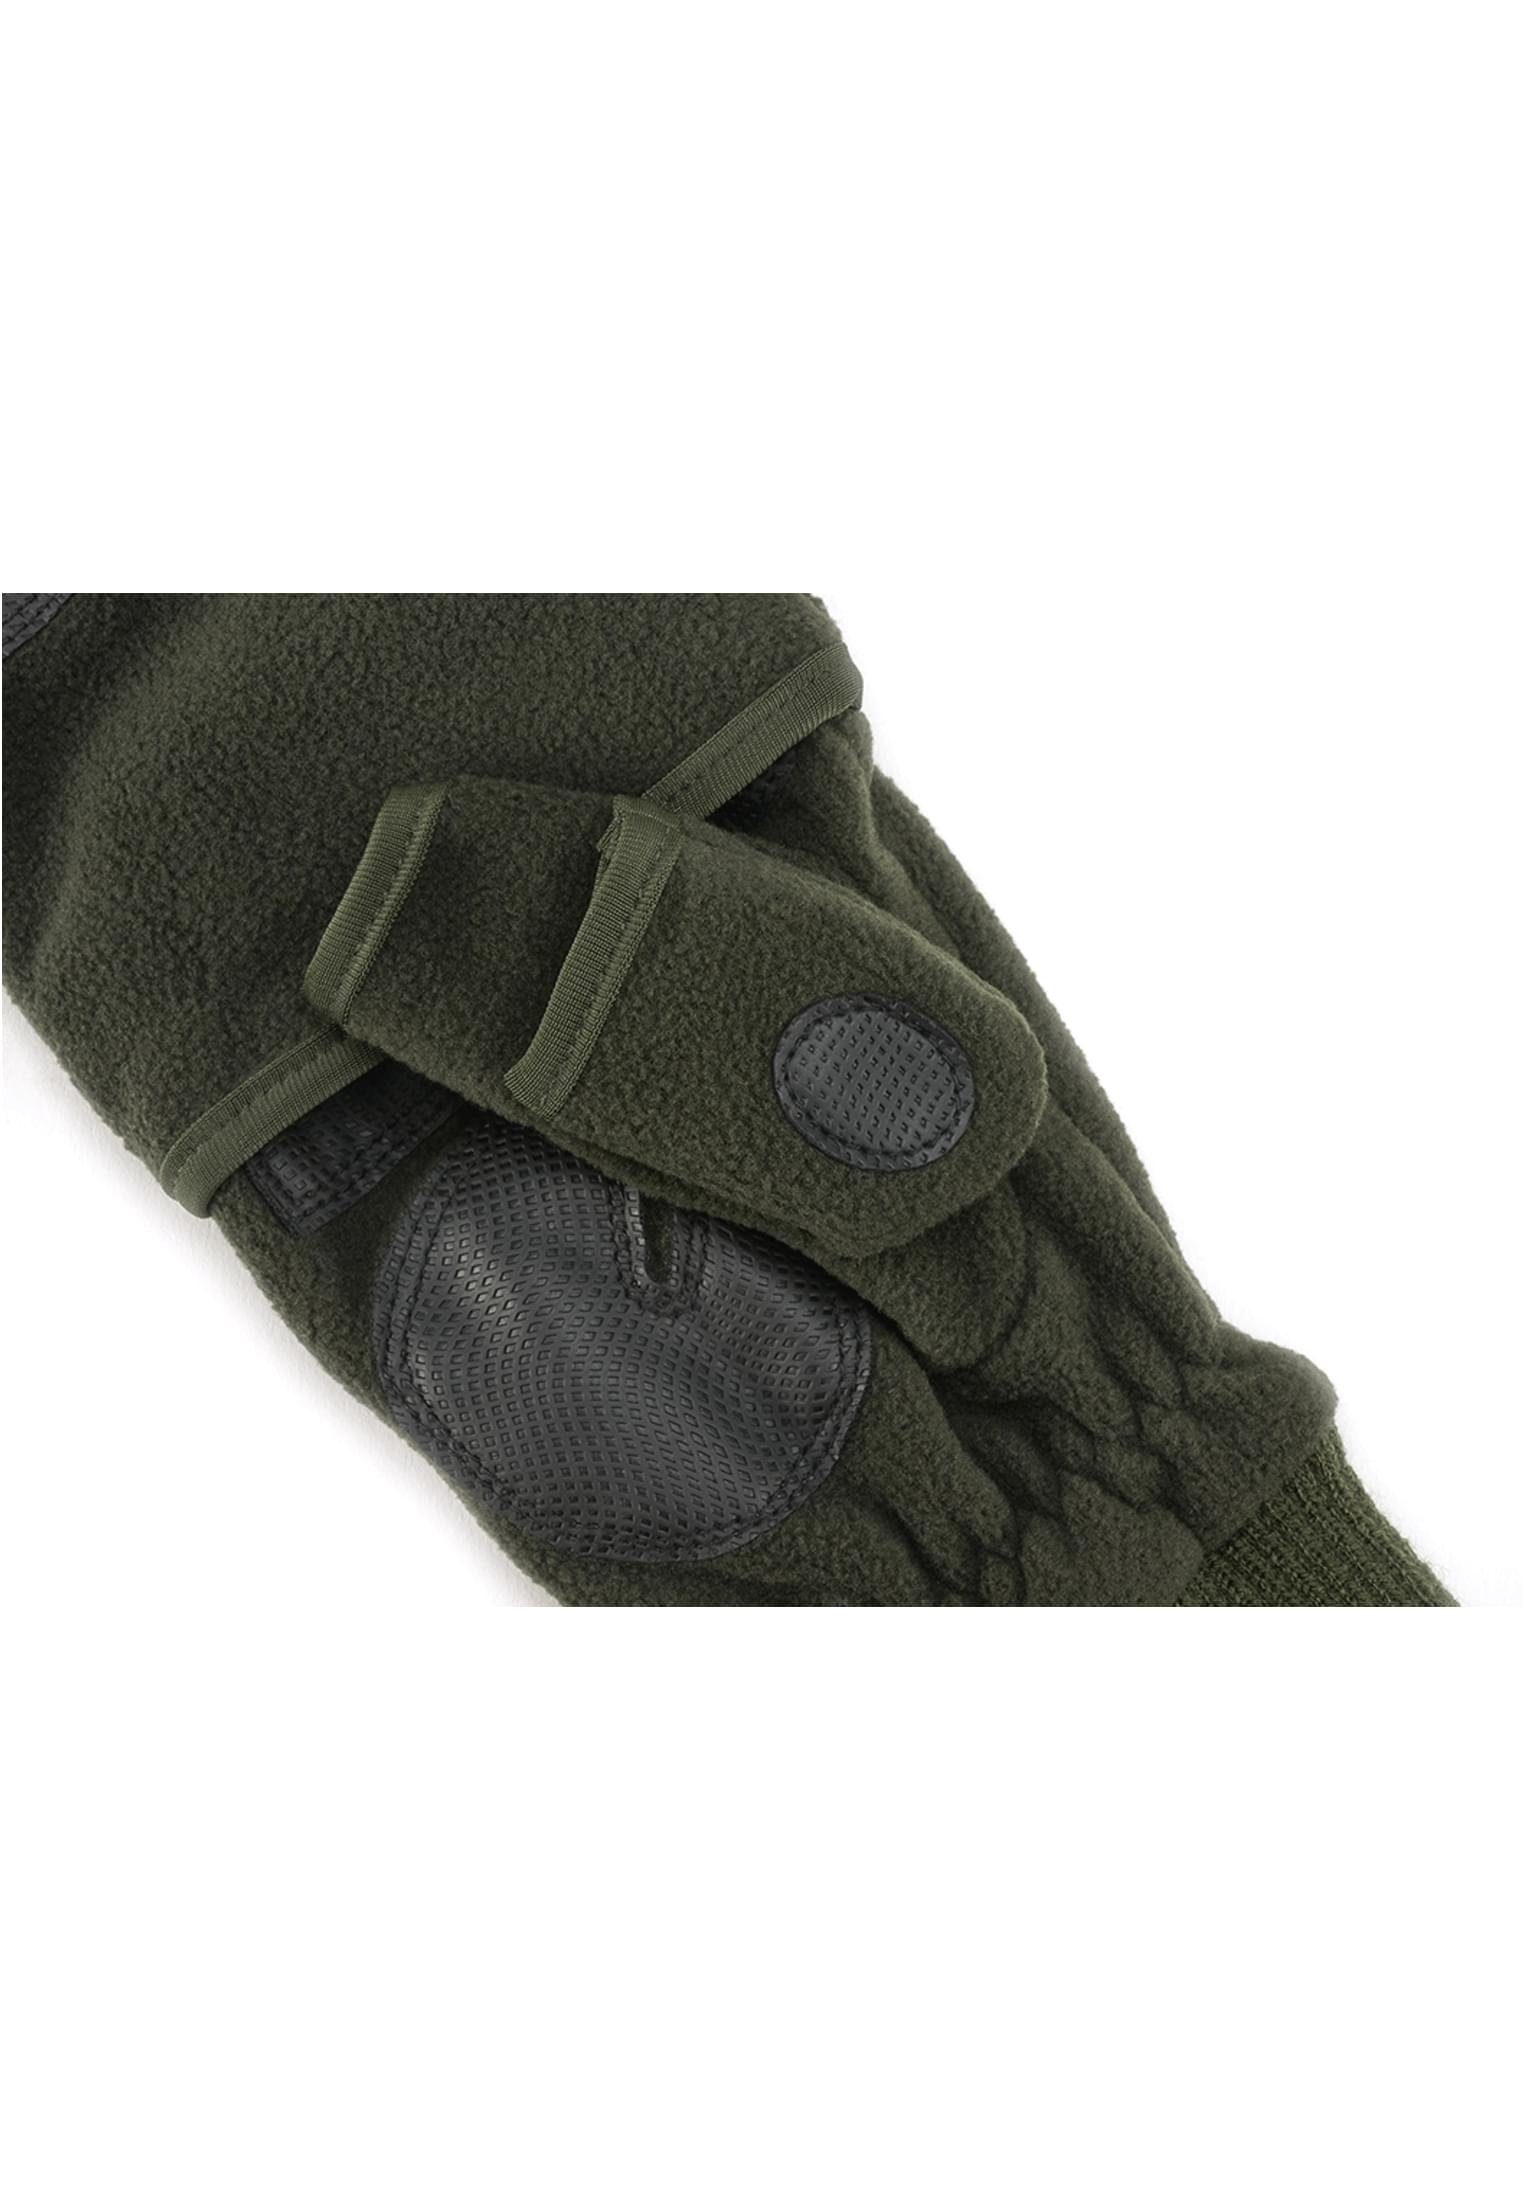 Accessoires Trigger olive Brandit Baumwollhandschuhe Gloves